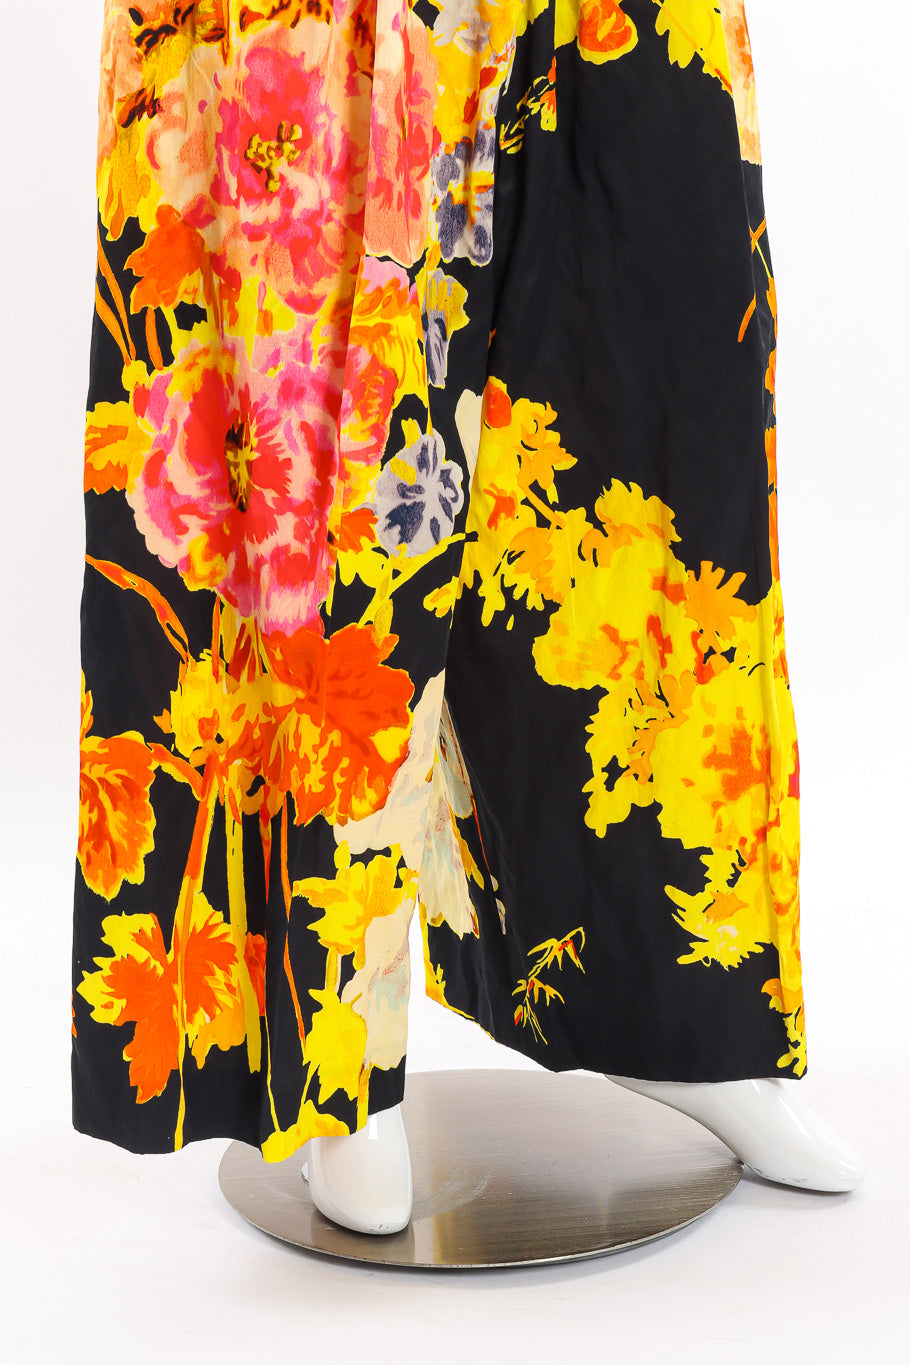 Dries Van Noten floral wide leg pant fabric details @recessla